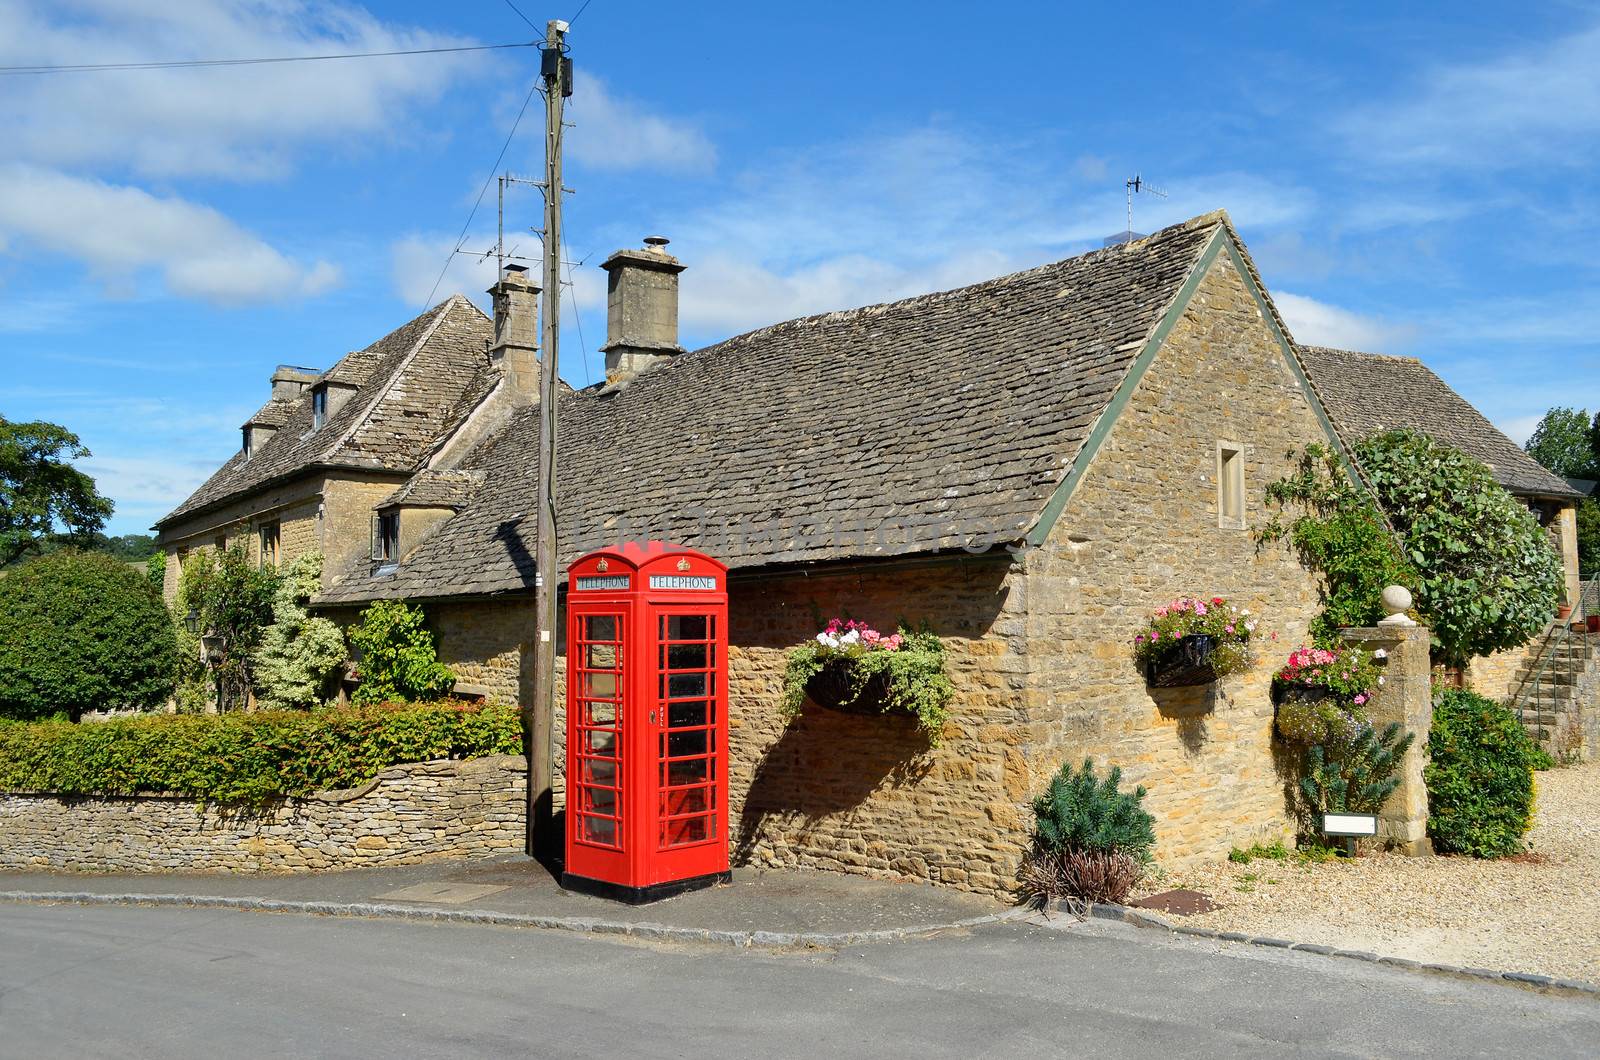 Village in rural England by pljvv